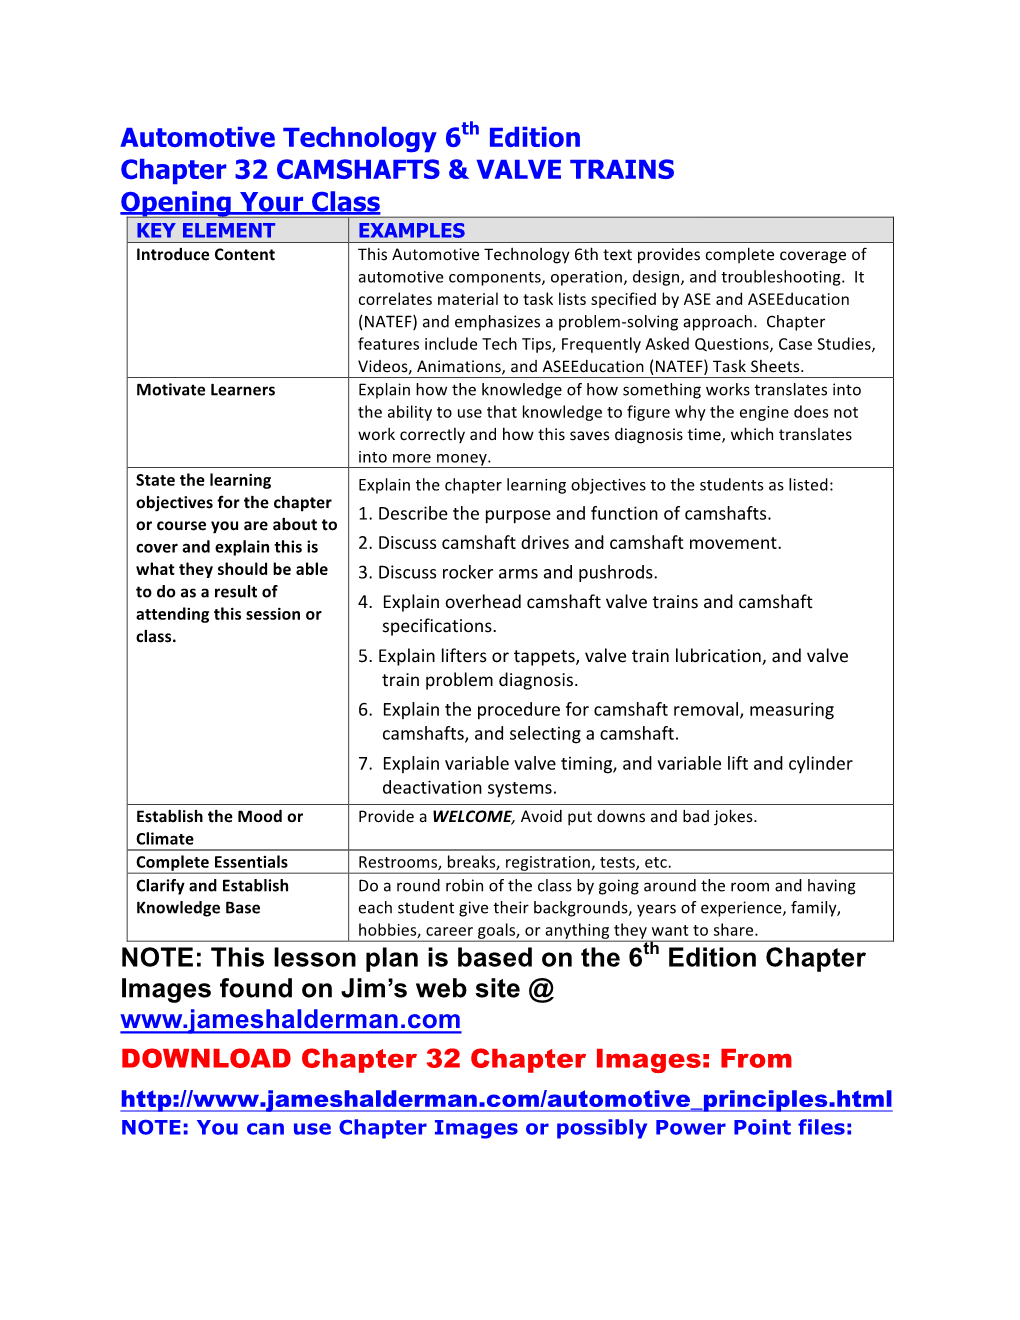 Automotive Technology 6Th Edition Chapter 32 CAMSHAFTS & VALVE